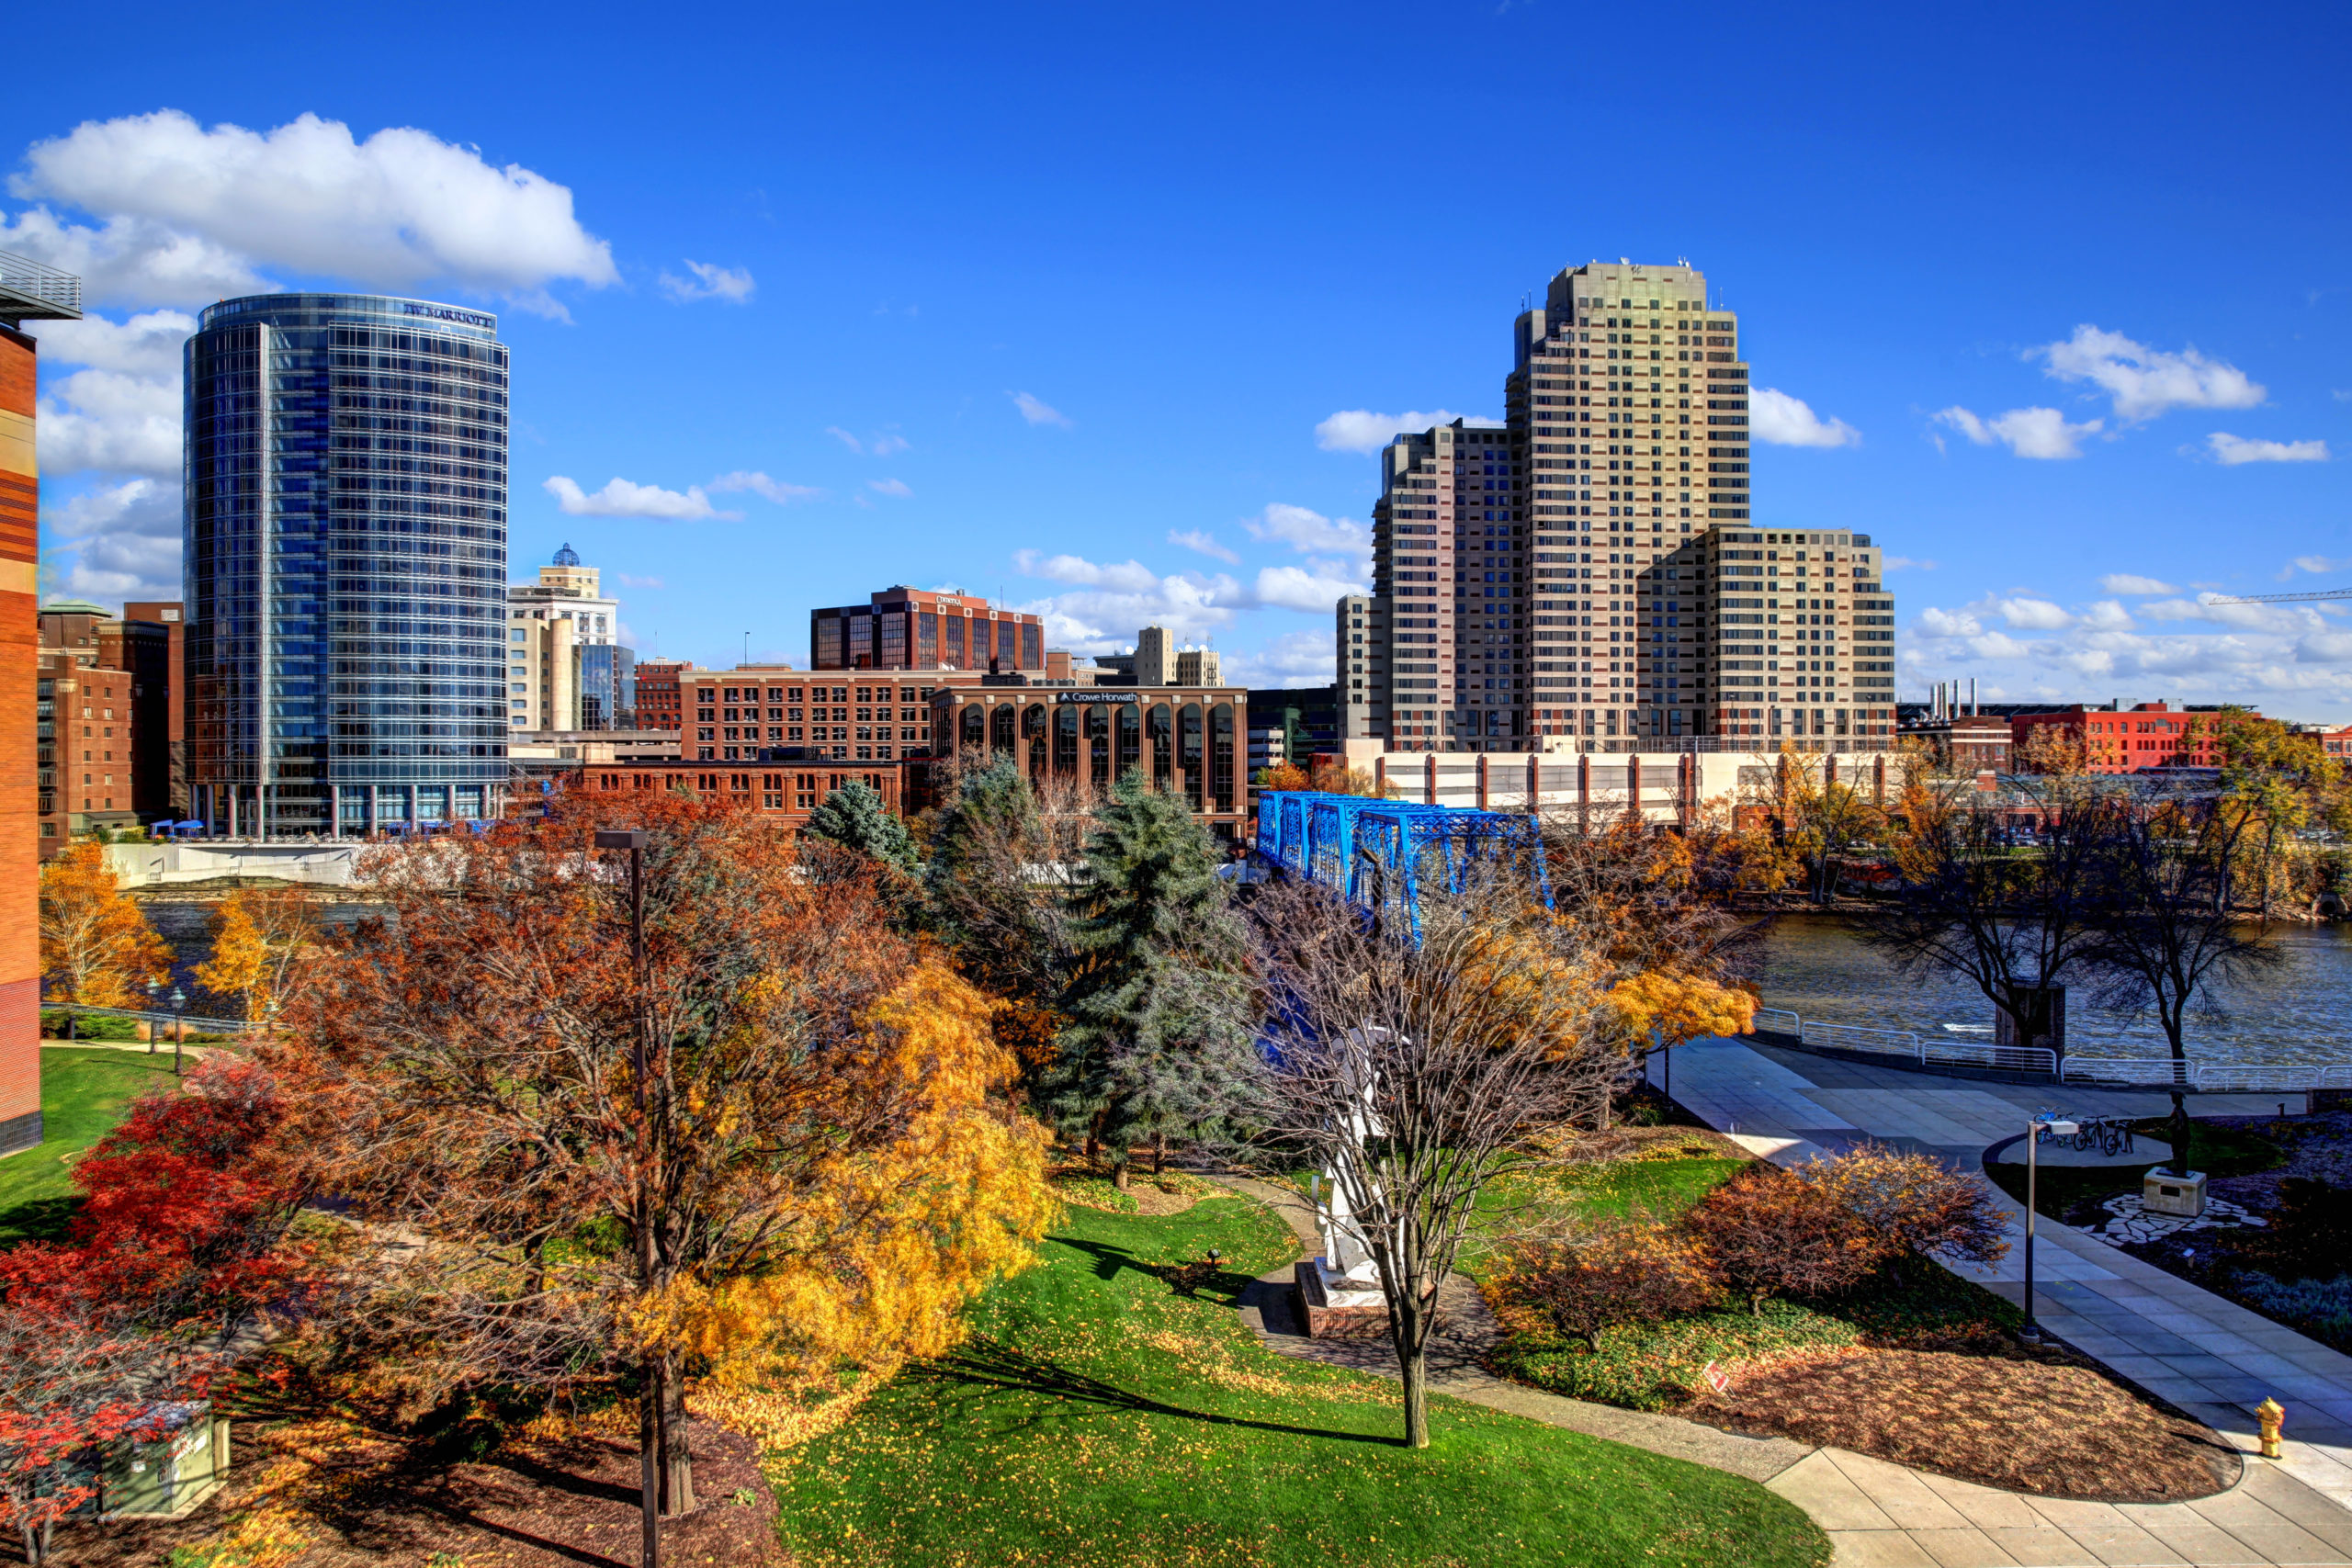 The beautiful city of Grand Rapids, Michigan.